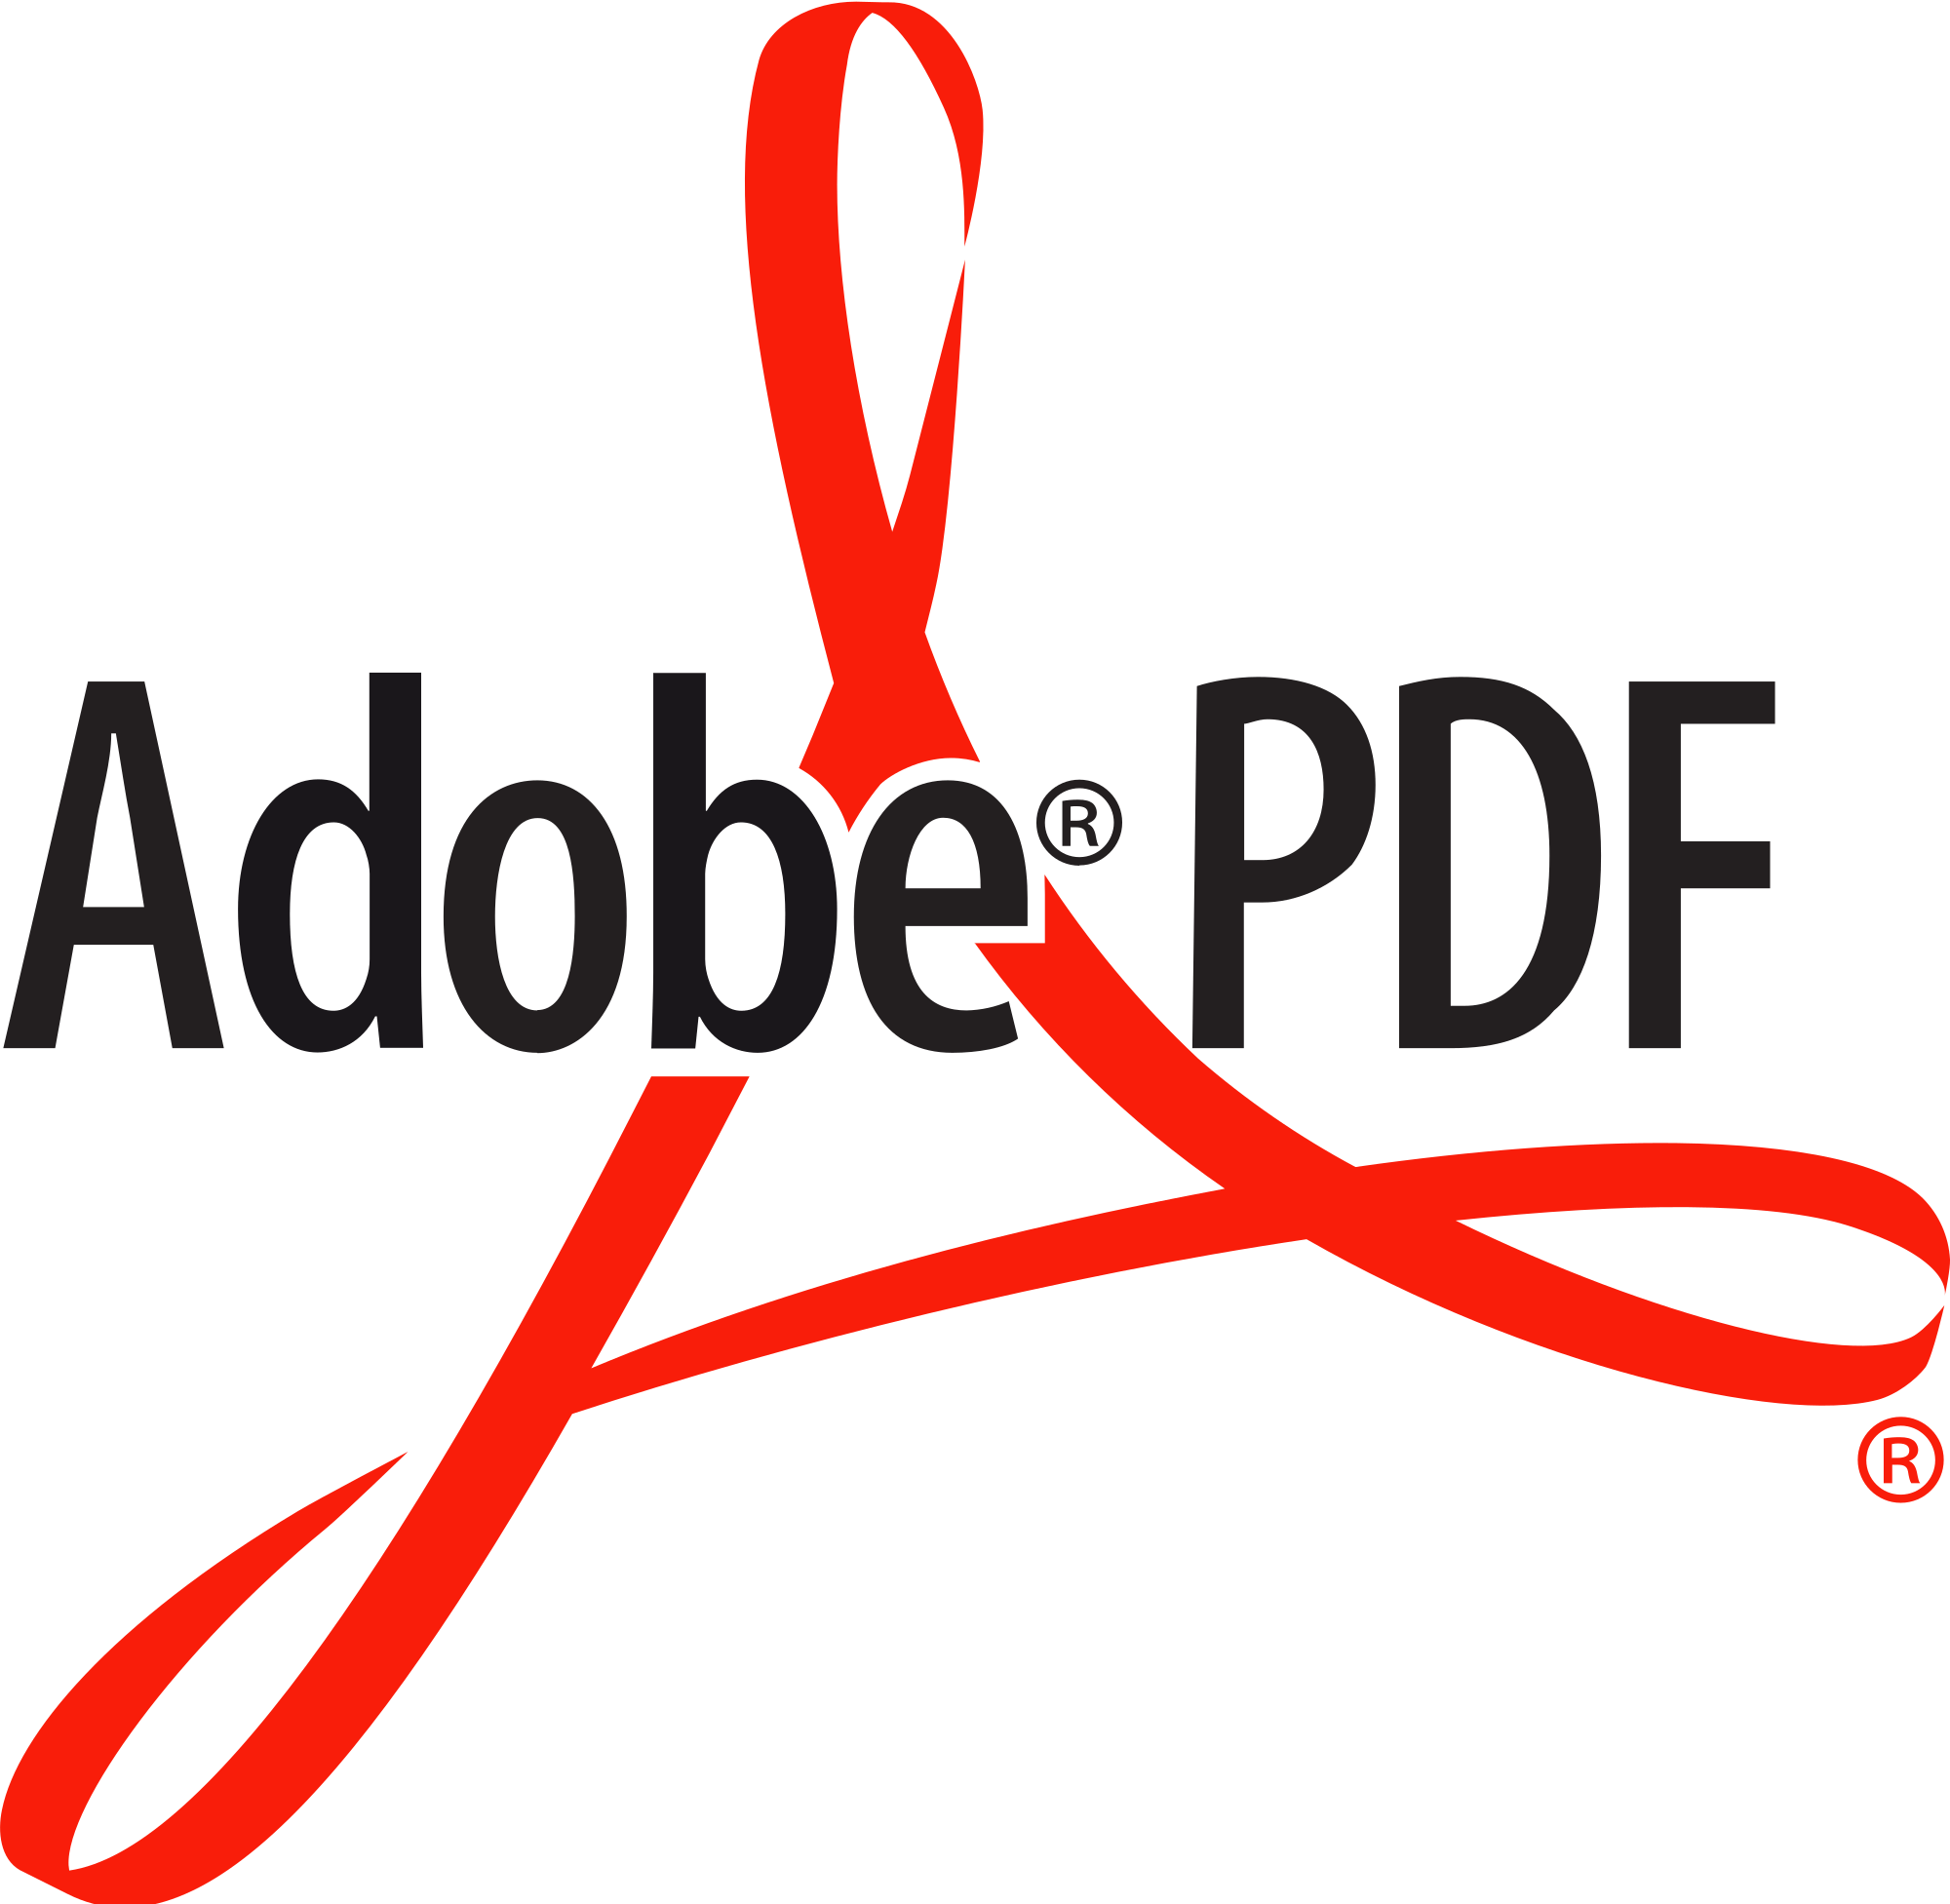 Adobe PDF Logo - File:Adobe PDF.svg - Wikimedia Commons